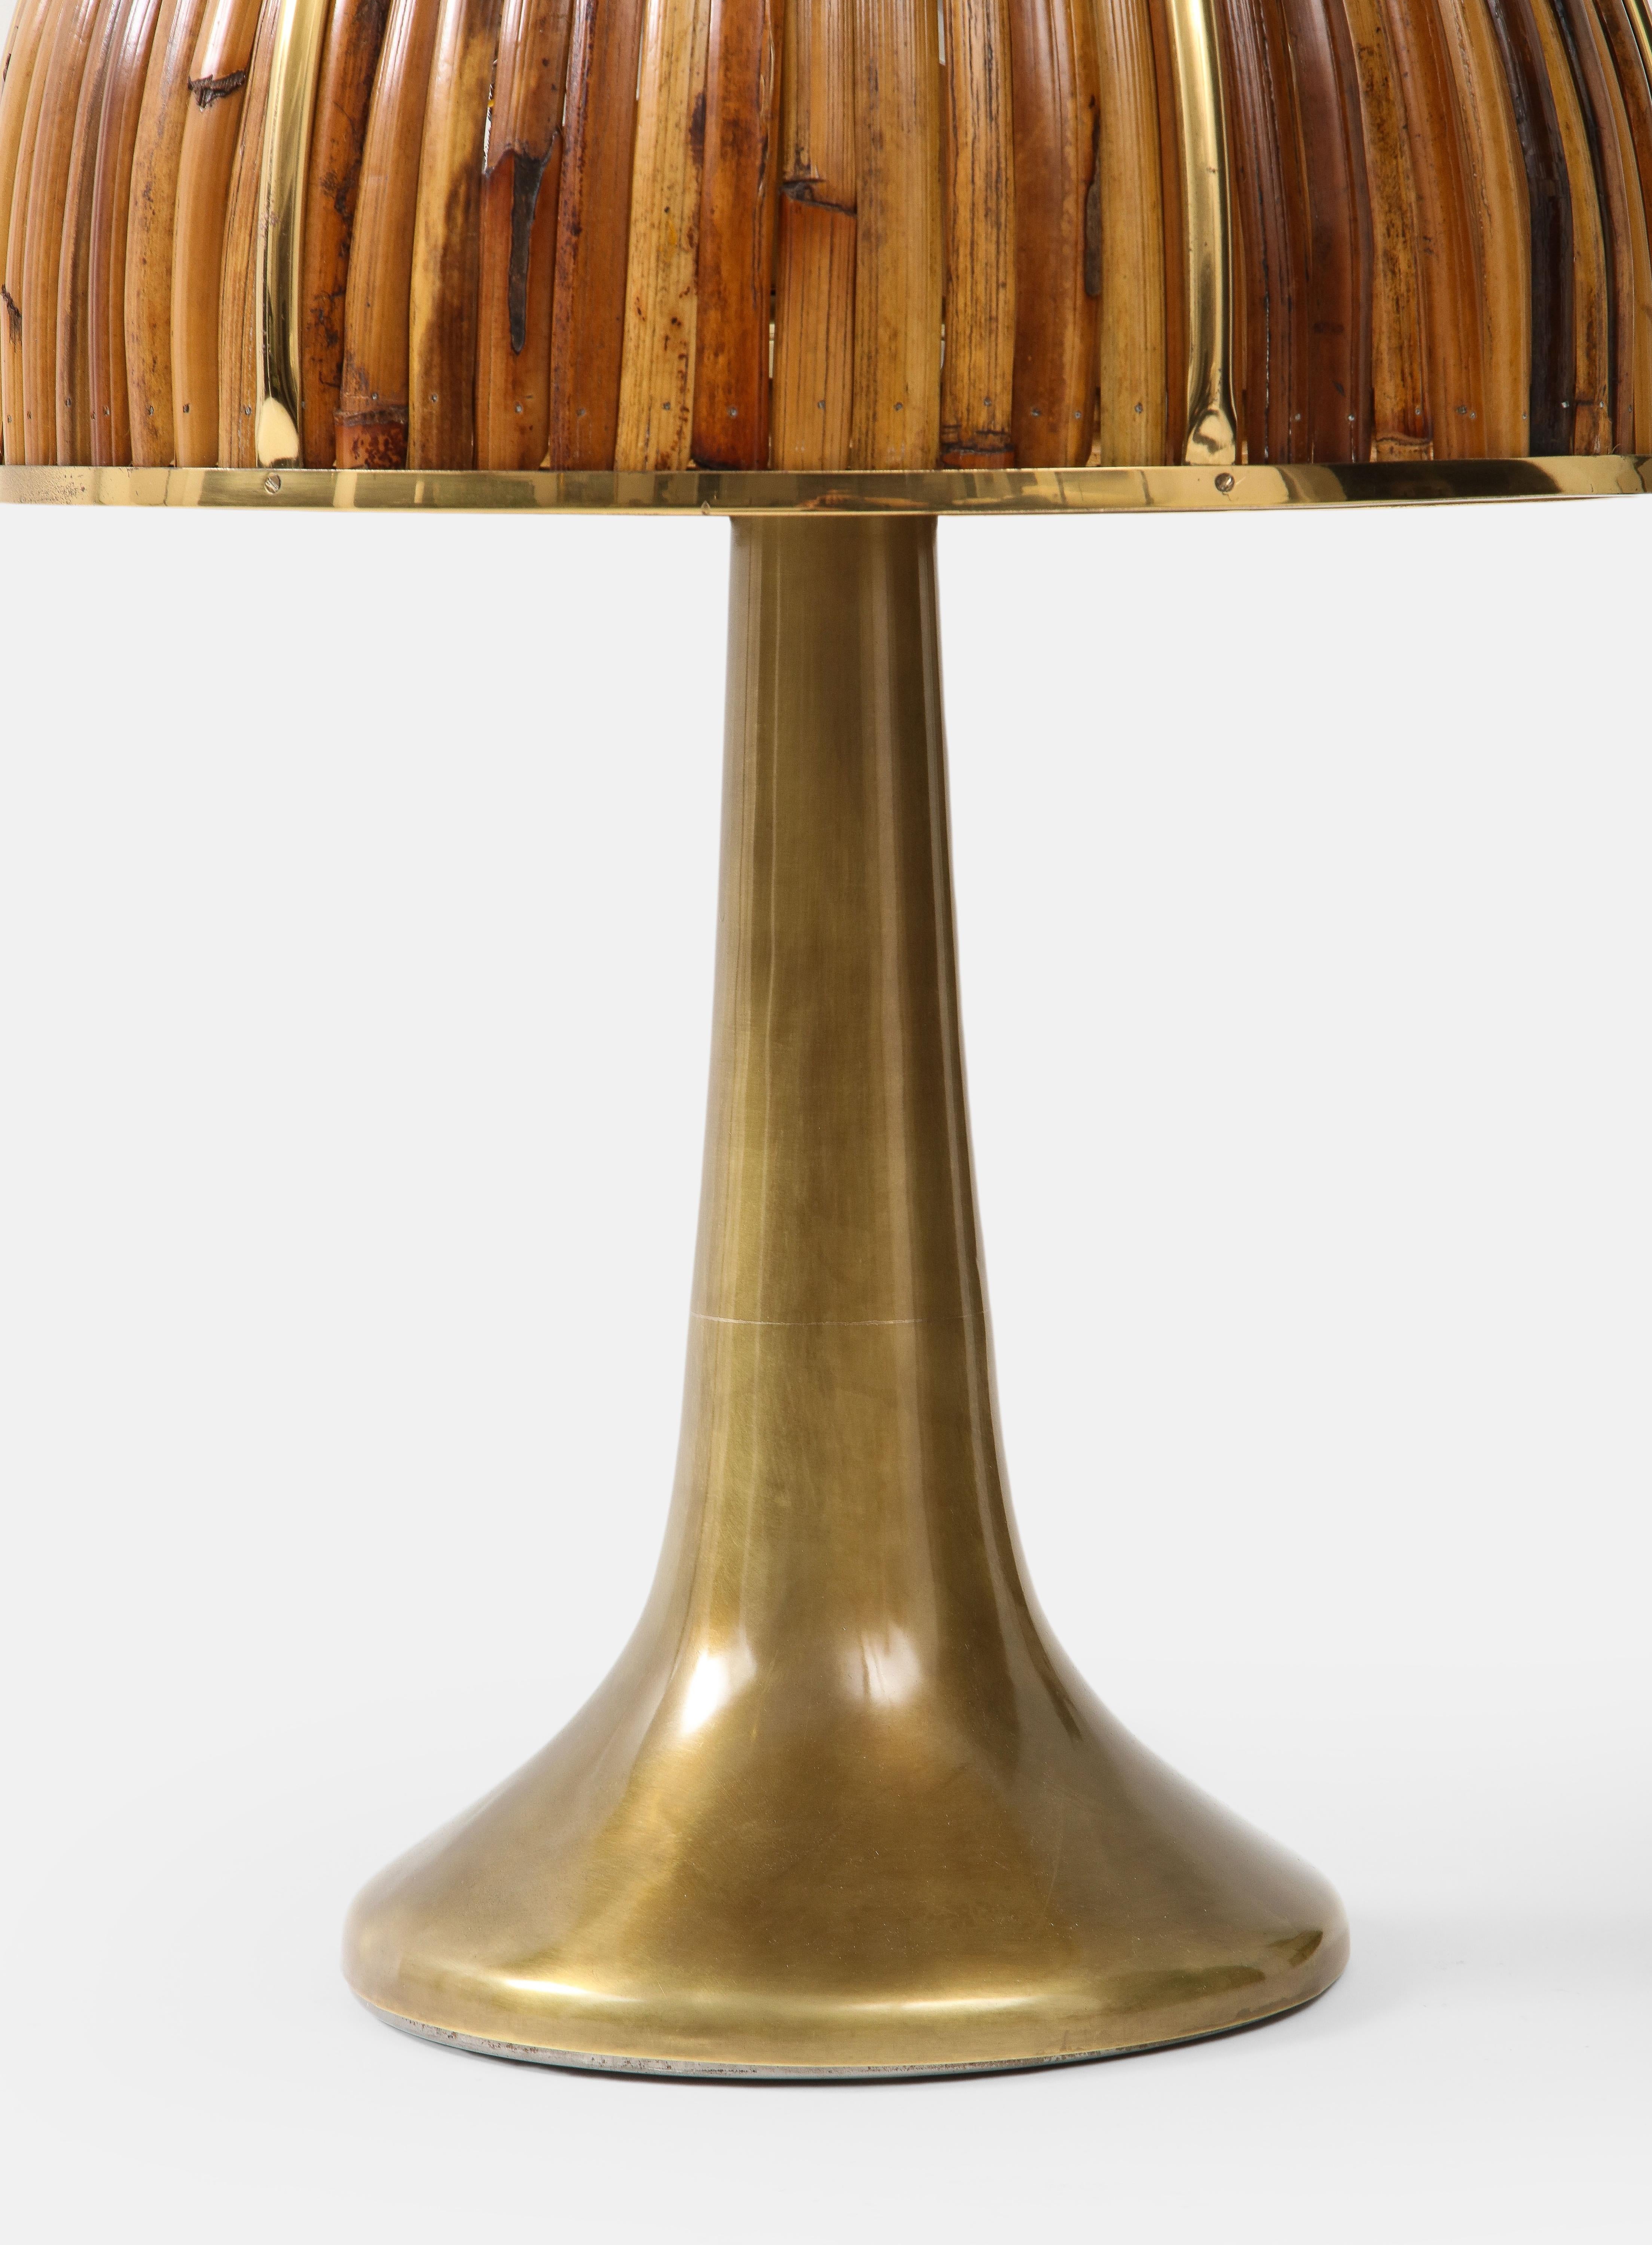 Italian Gabriella Crespi Rare 'Fungo' Table Lamp in Bamboo and Brass, Italy, 1970s For Sale